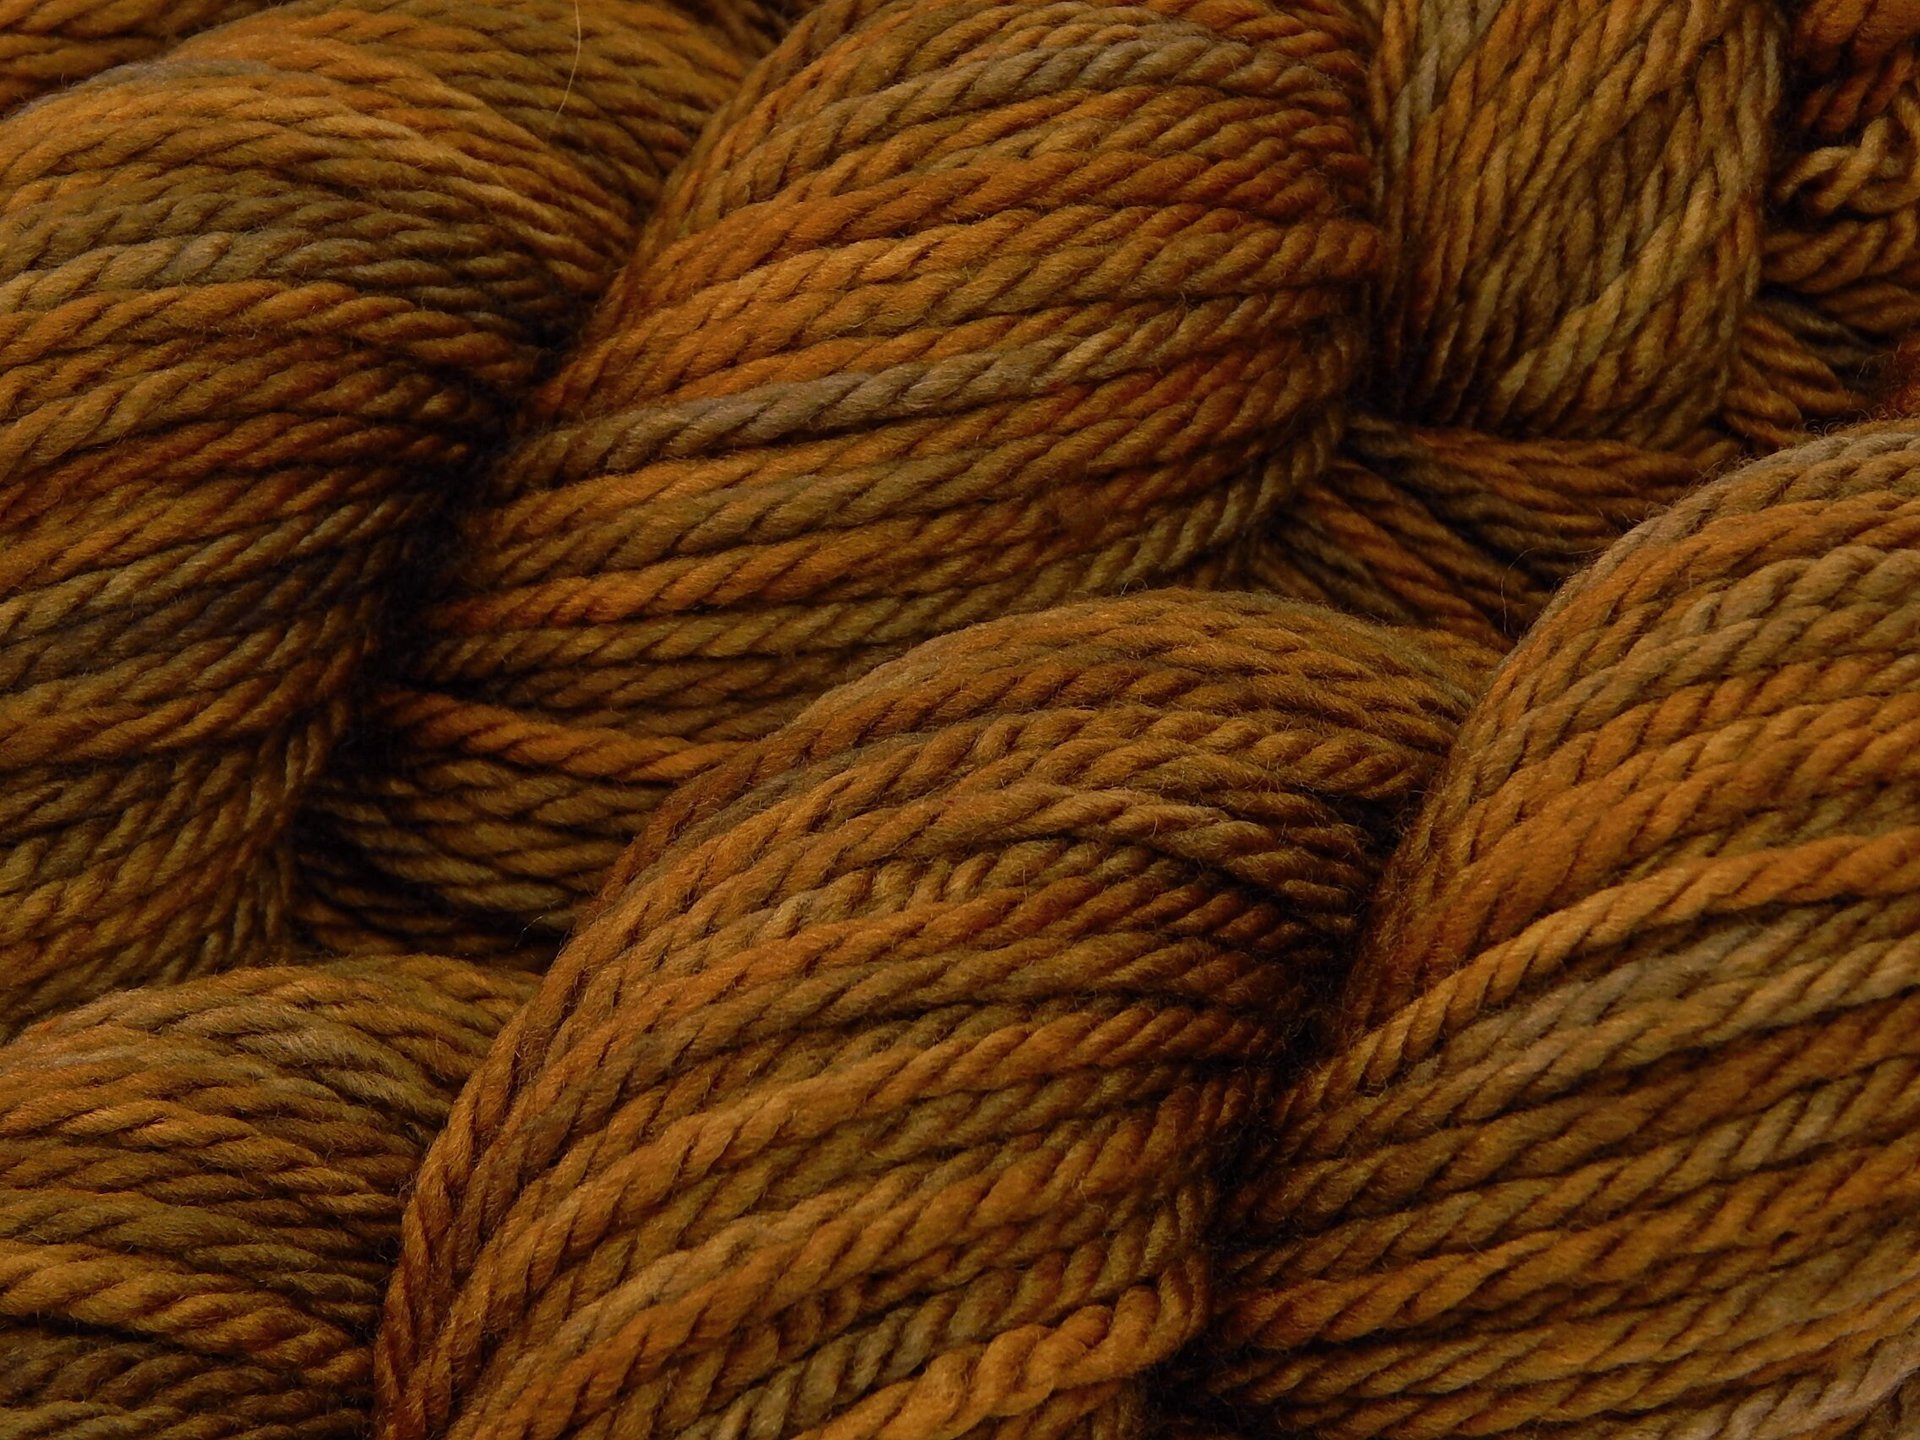 Hand Dyed Yarn, Bulky 100% Superwash Merino Wool - Hazelnut - Indie Dyer Thick Warm Brown Hand Dyed Yarn, Soft Tonal Chunky Knitting Yarn